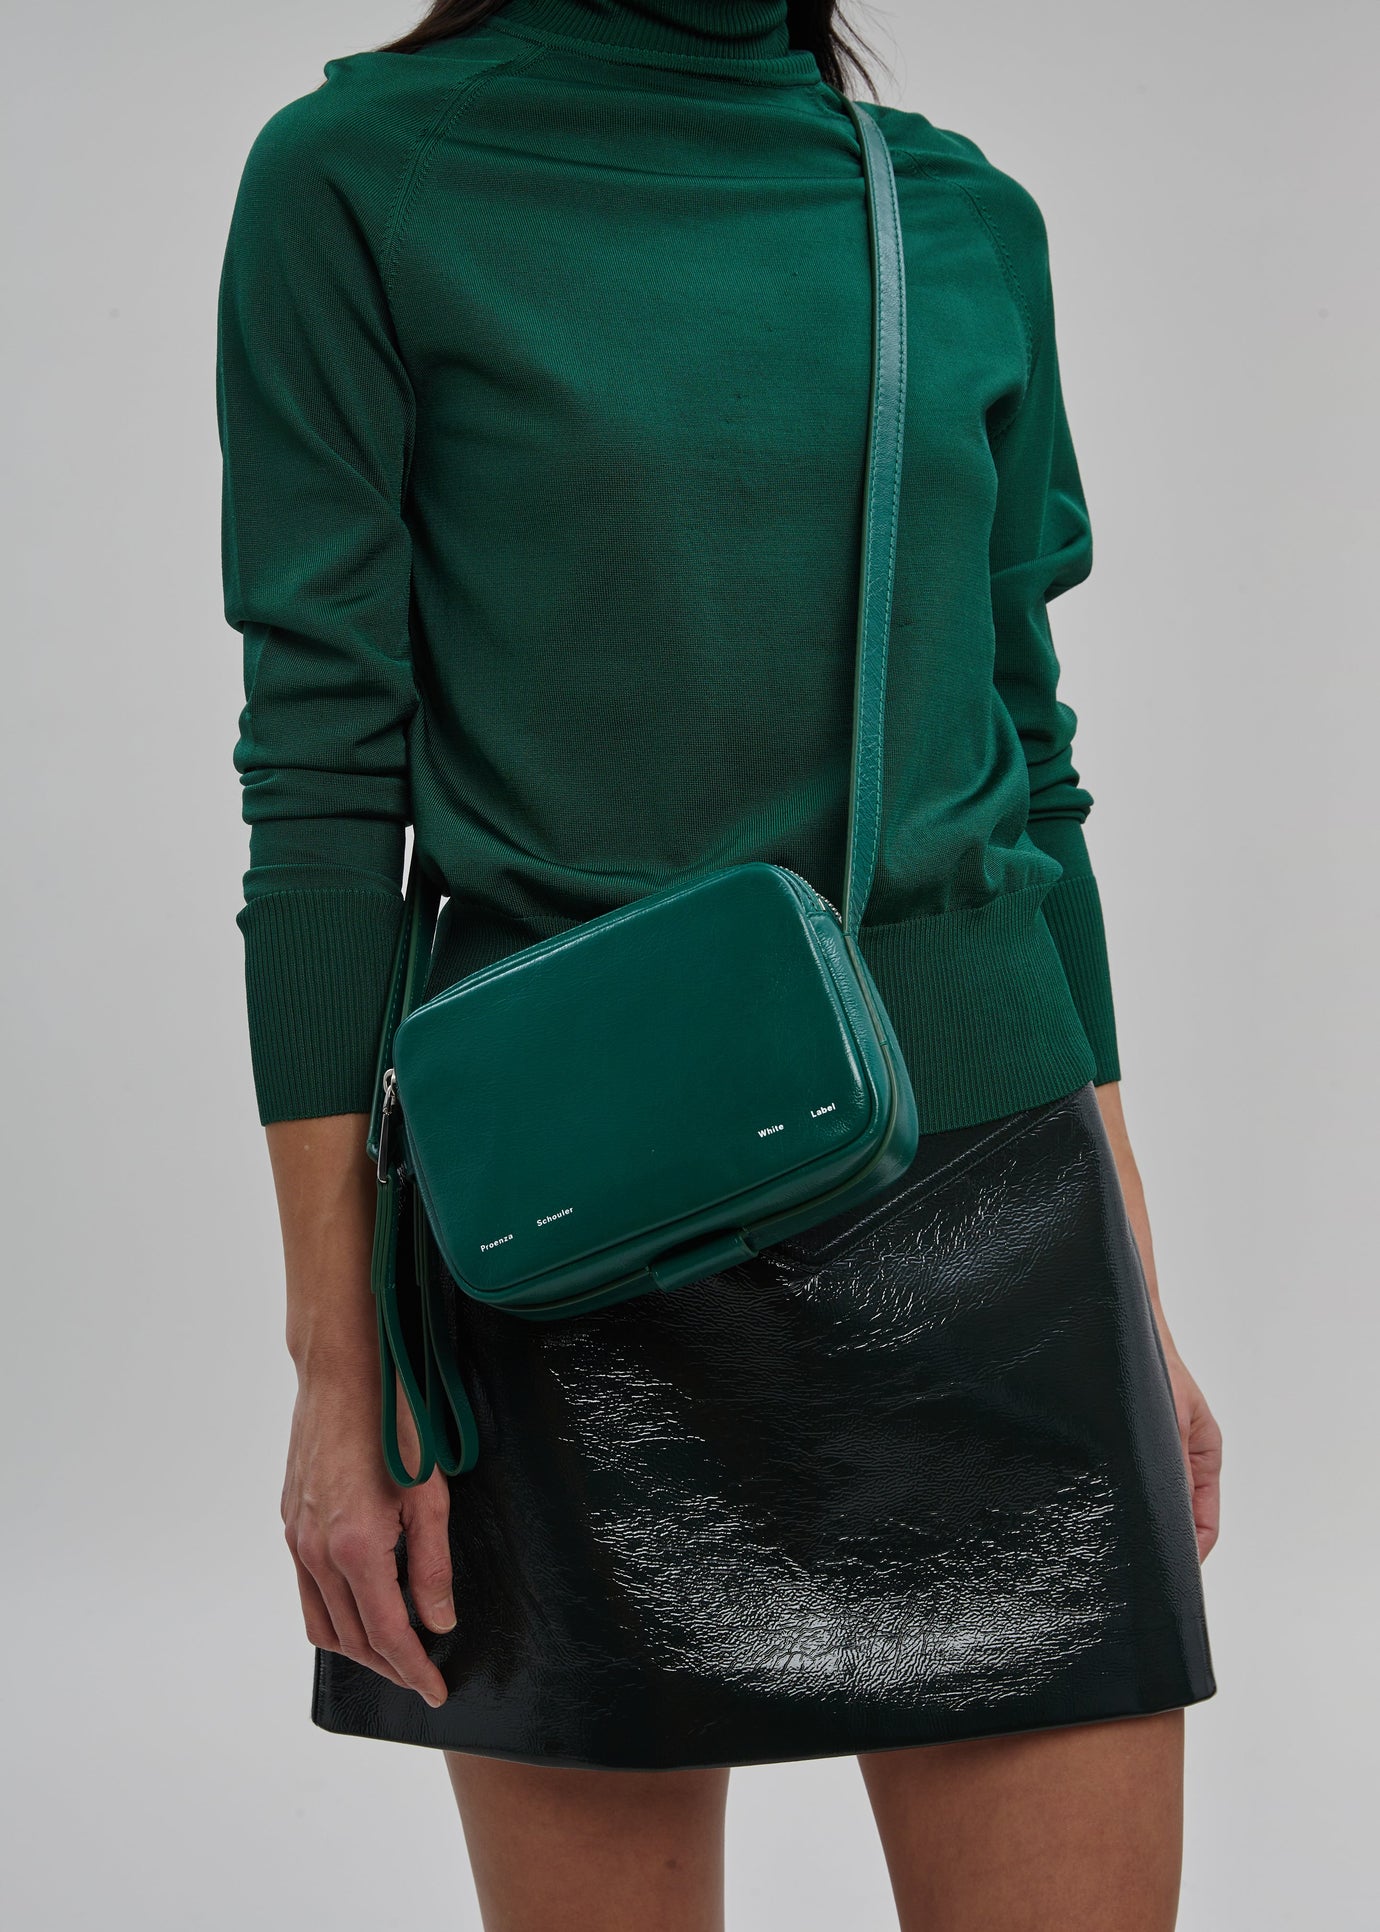 Proenza Schouler White Label Watts Leather Camera Bag - Emerald - 1